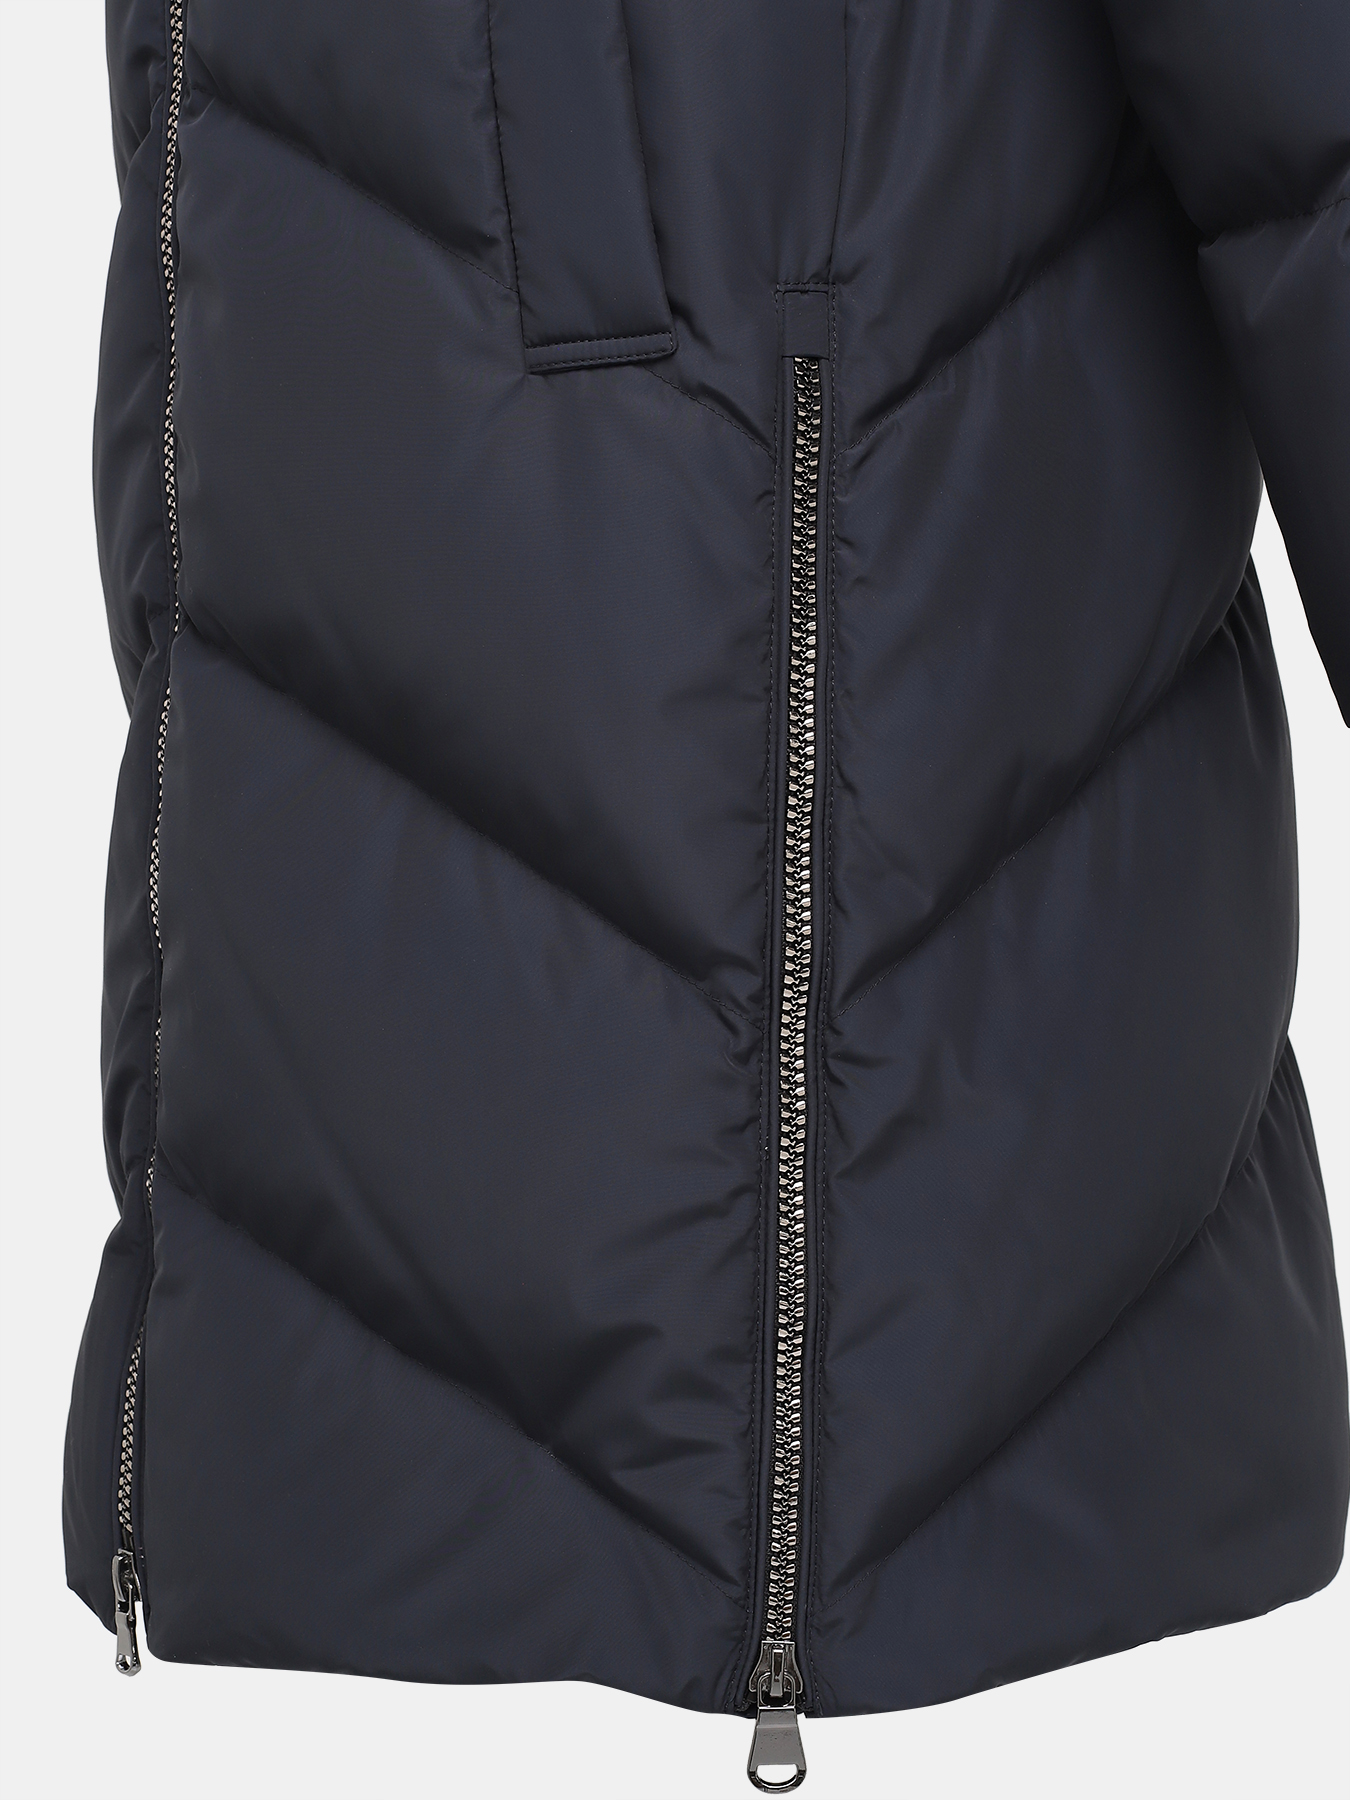 Пальто зимнее AVI 433610-021, цвет темно-синий, размер 46 - фото 3